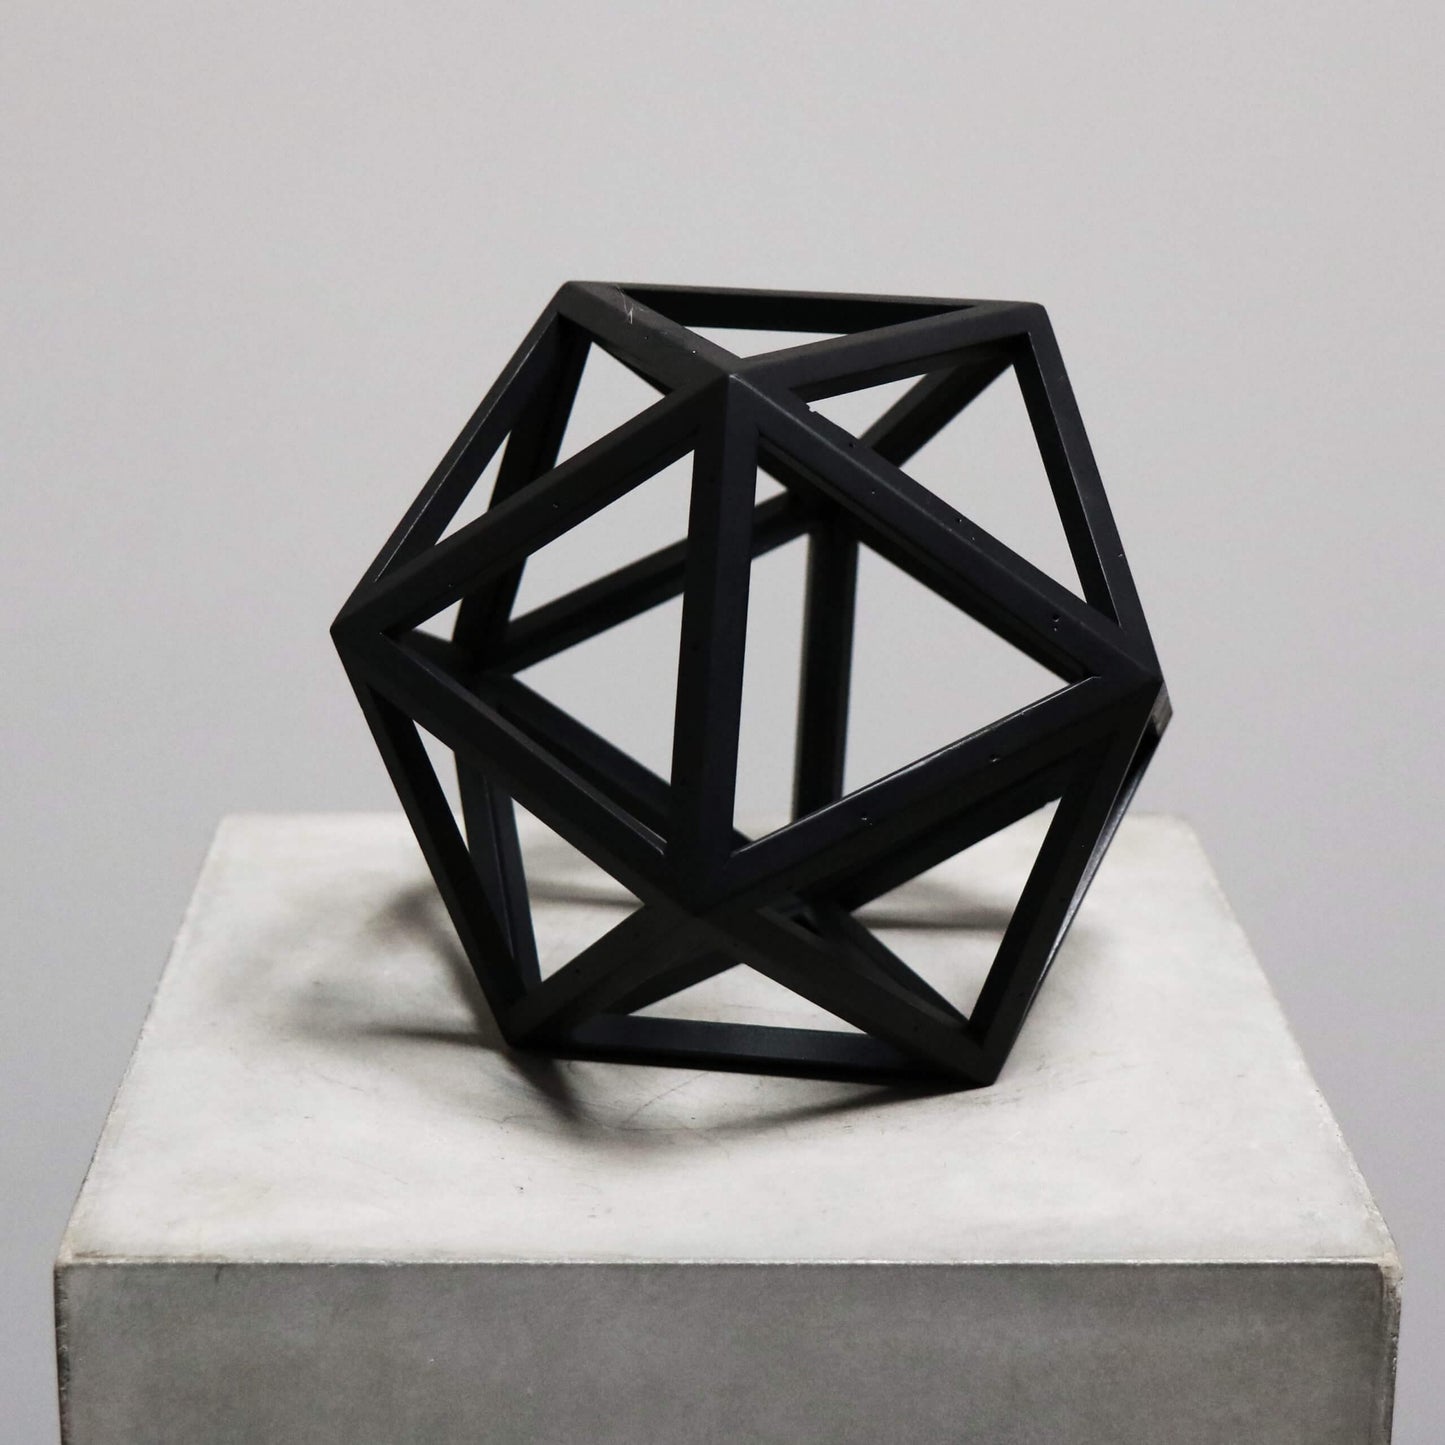 Beautiful geometrical model in burnt black wood for interior design decoration